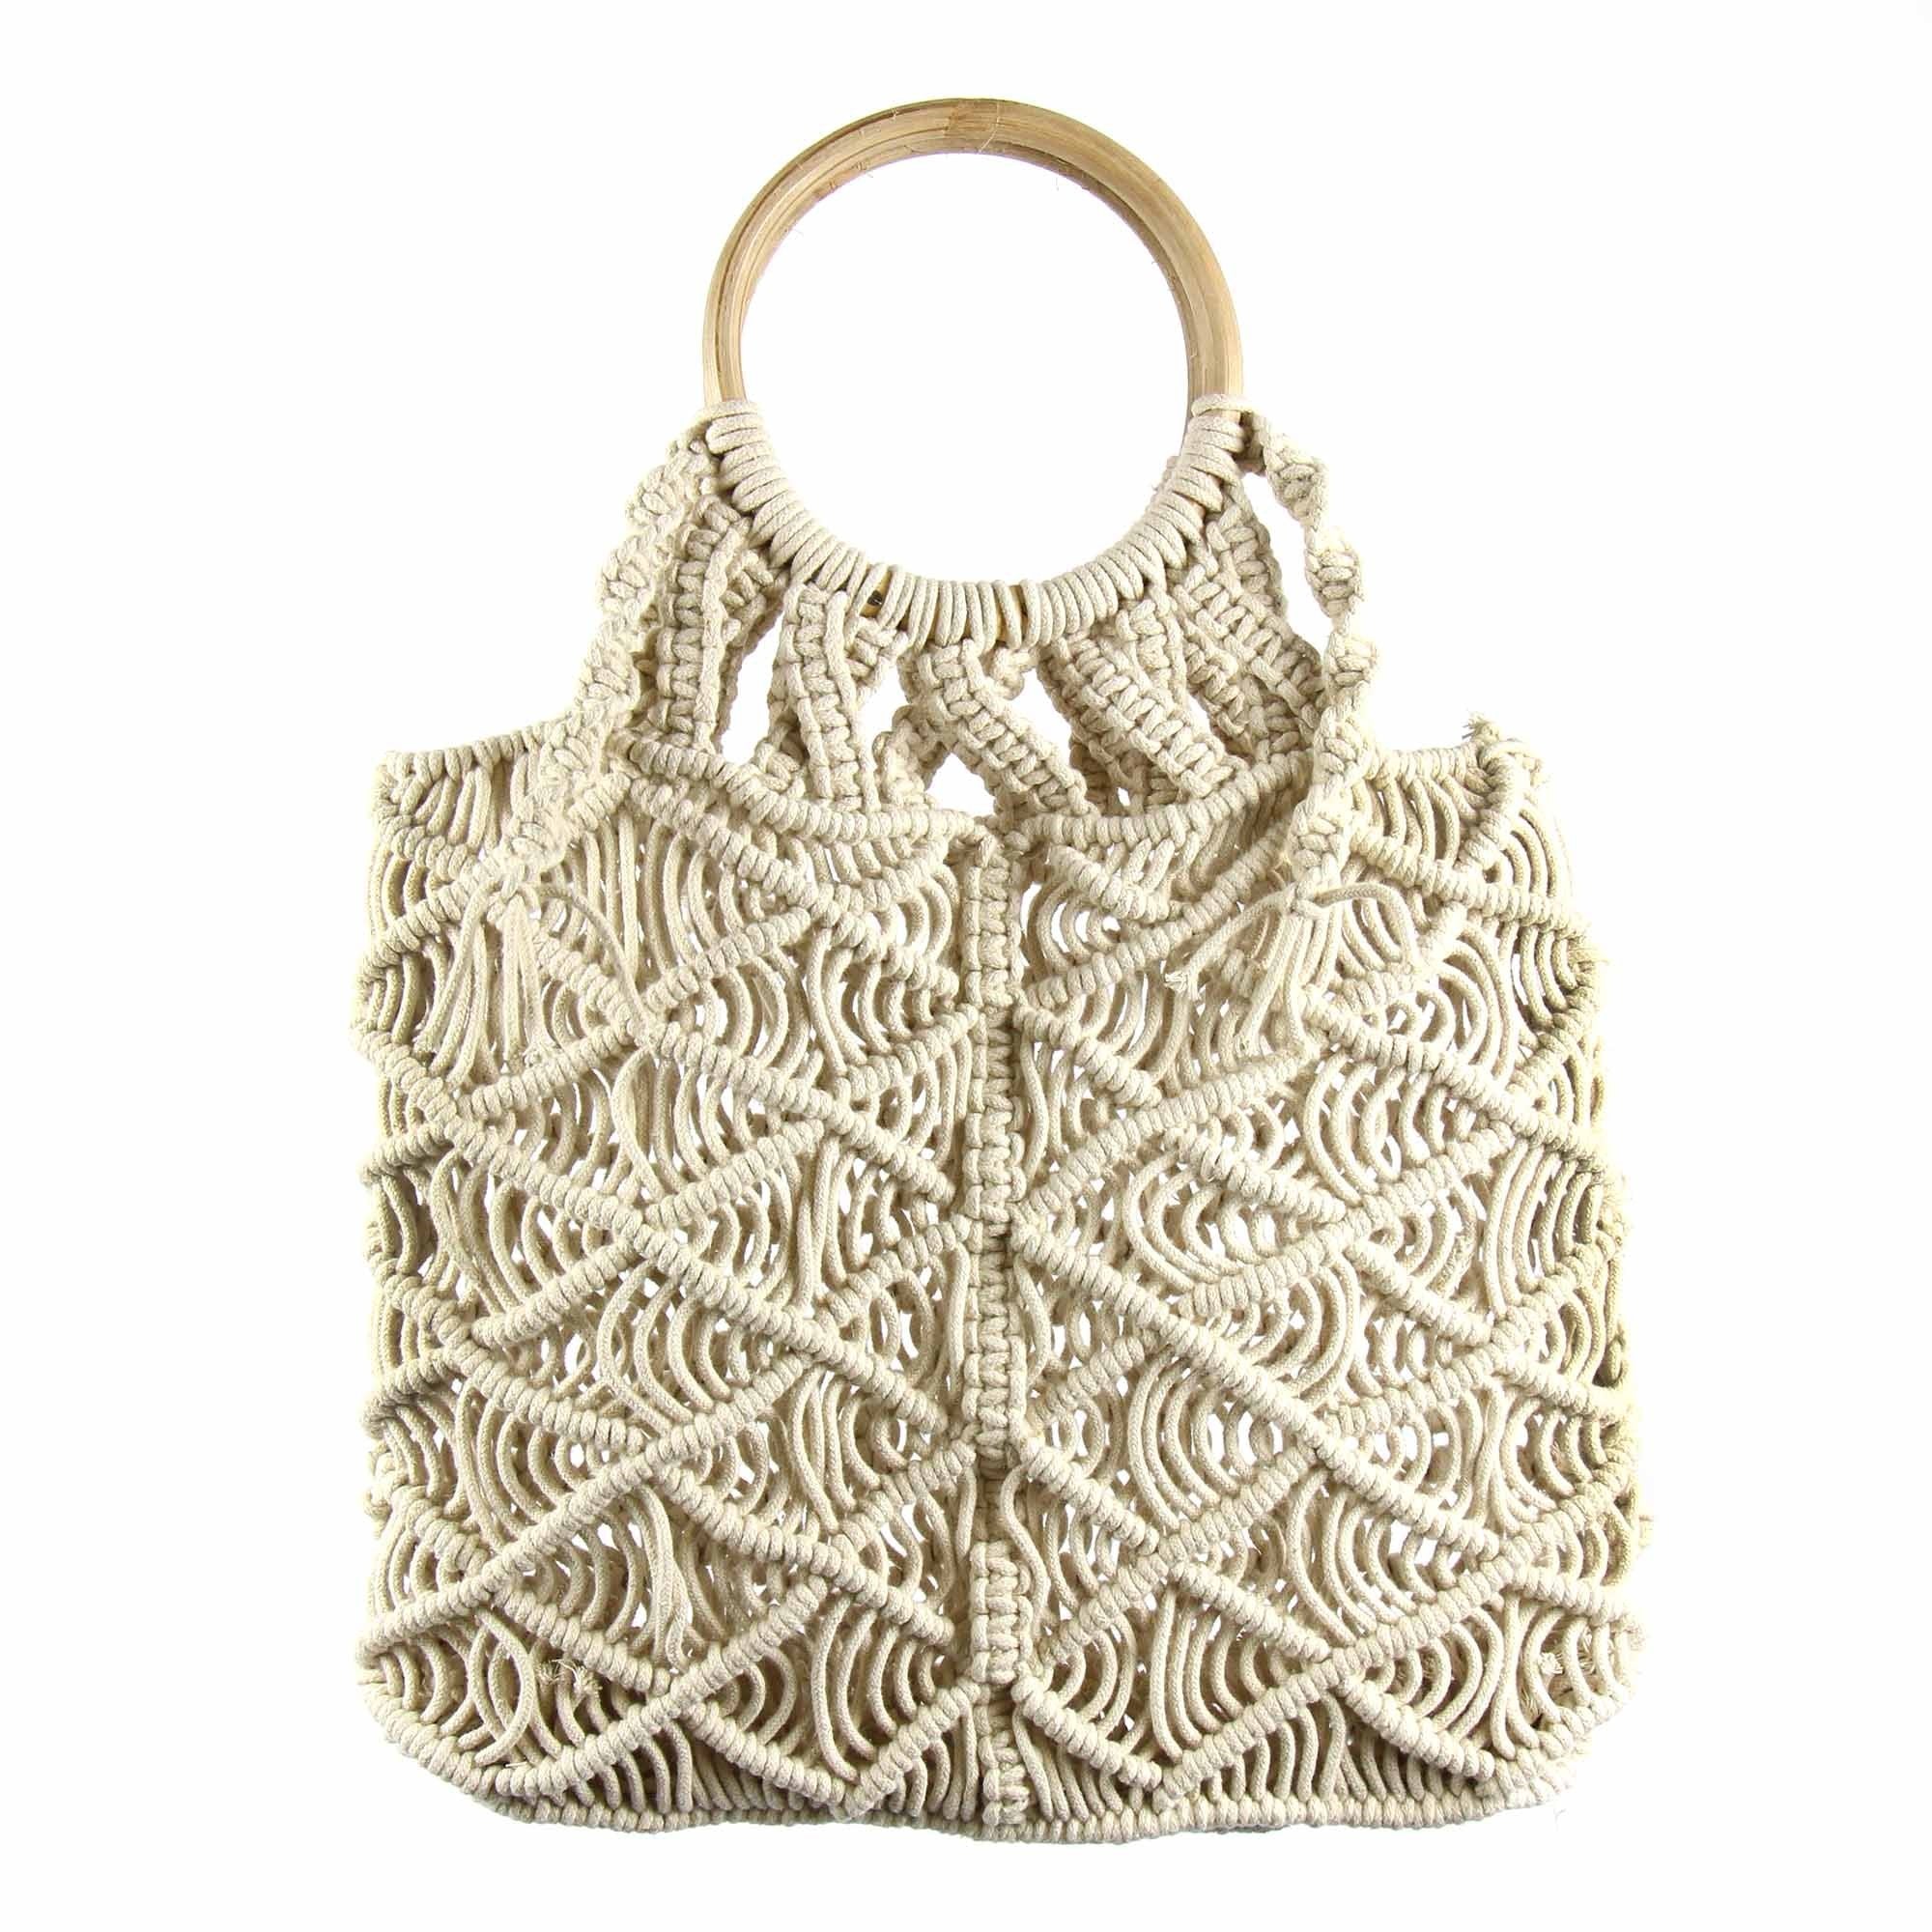 Storybook Macrame Handbag Shoulder Bag Purse Embroidered Cottagecore |  Fashion, Purses and bags, Clothes design